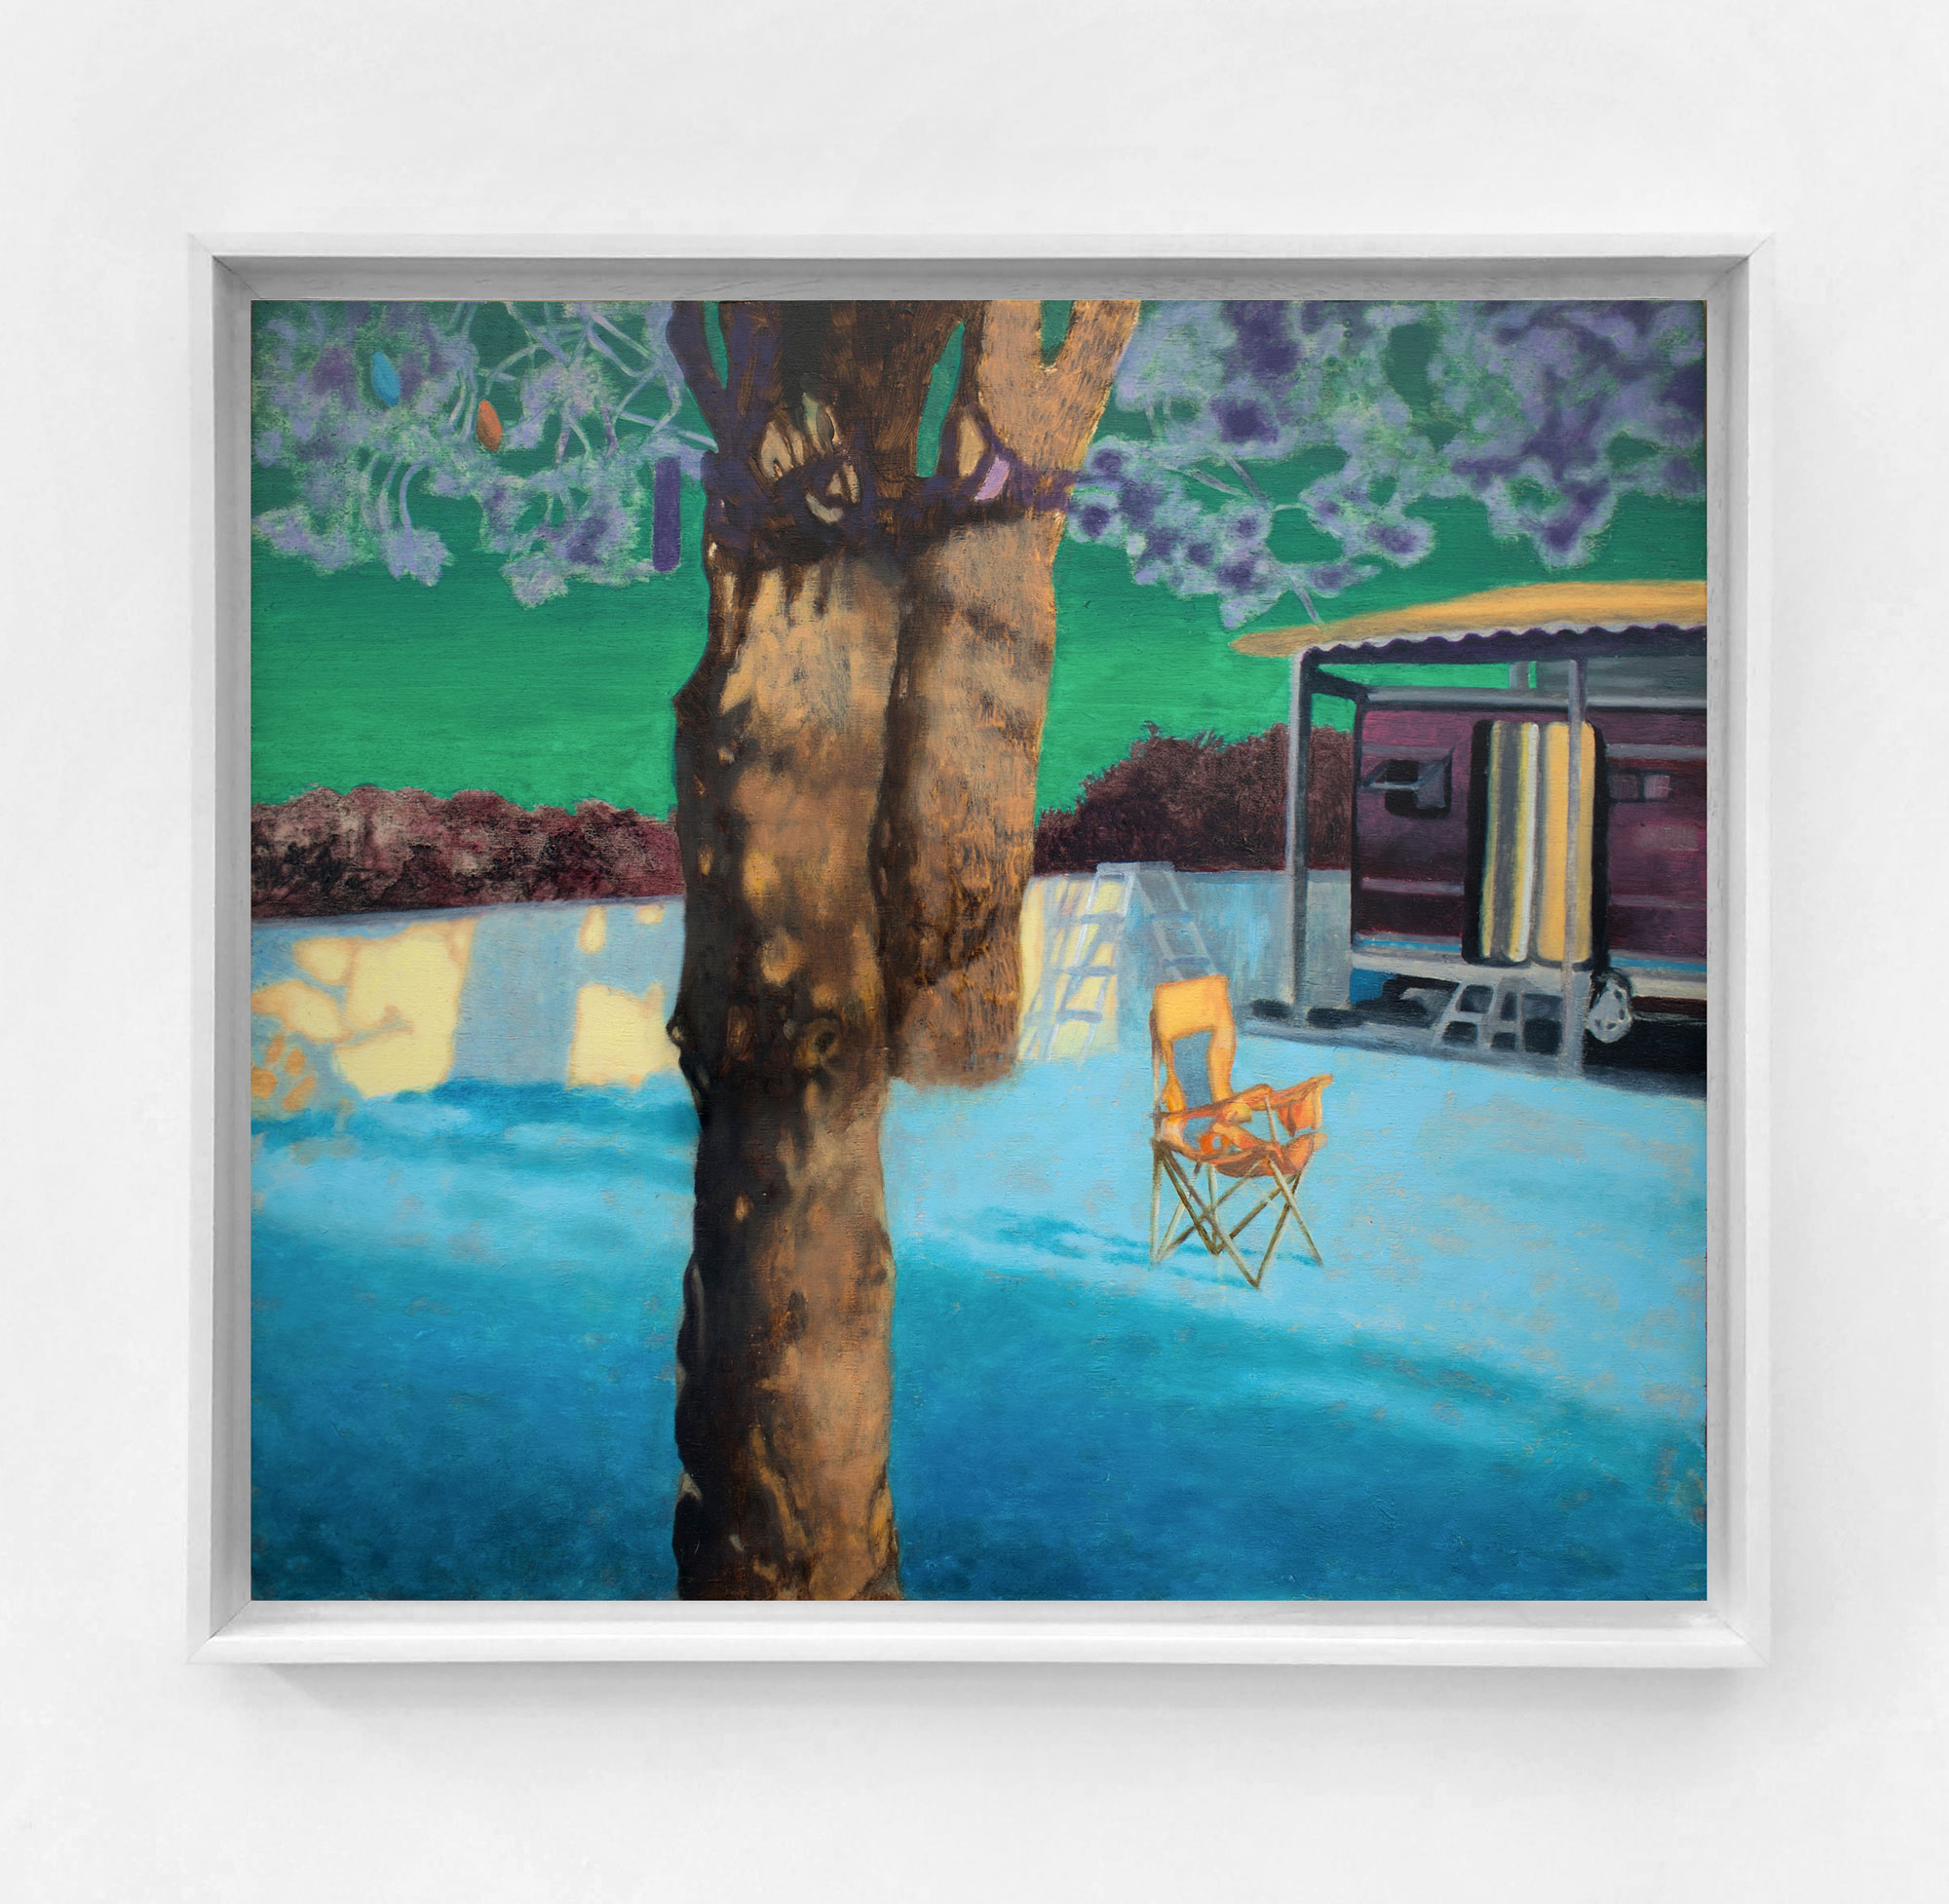 Karolina Orzełek, "Backyard IV", 2019, 46 x 41 cm, oil on panel